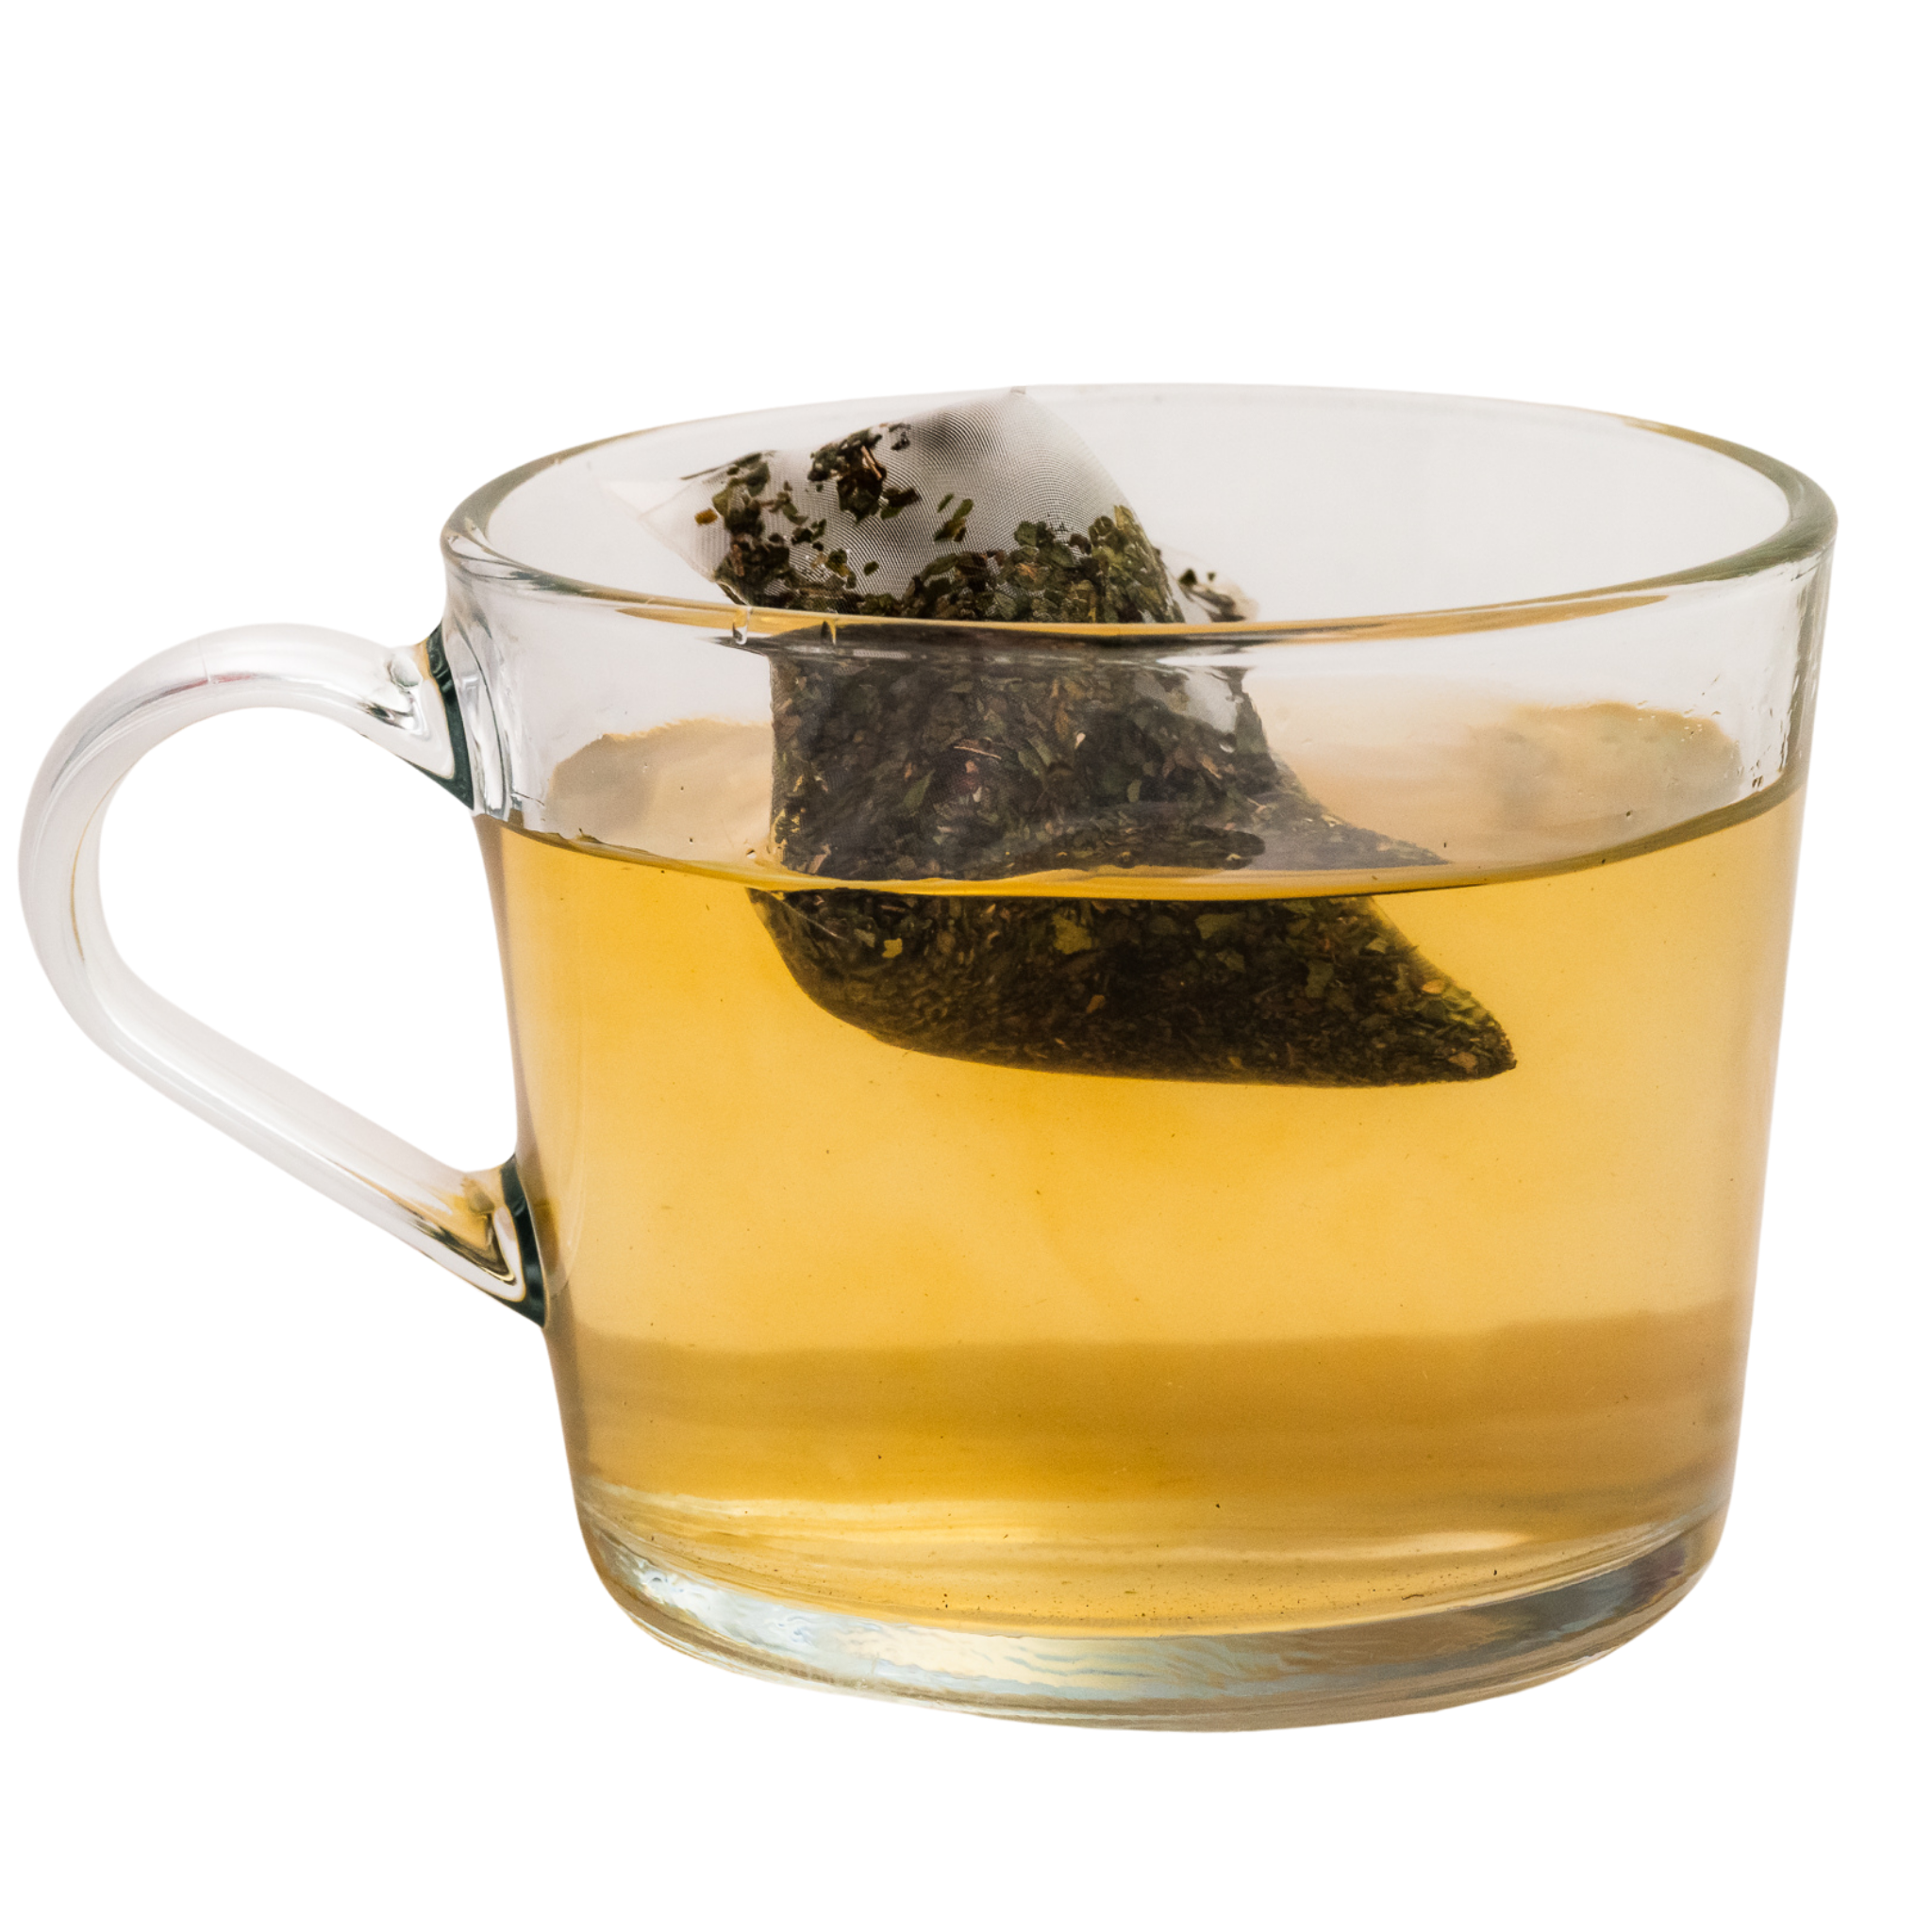 TEA MATE Loose Leaf Tea Bagger Infusing Tea In Clear Tea Cup Of TEA MATE Organic Peppy Mint Peppermint Tea In Premium Biodegradable Tea Bags